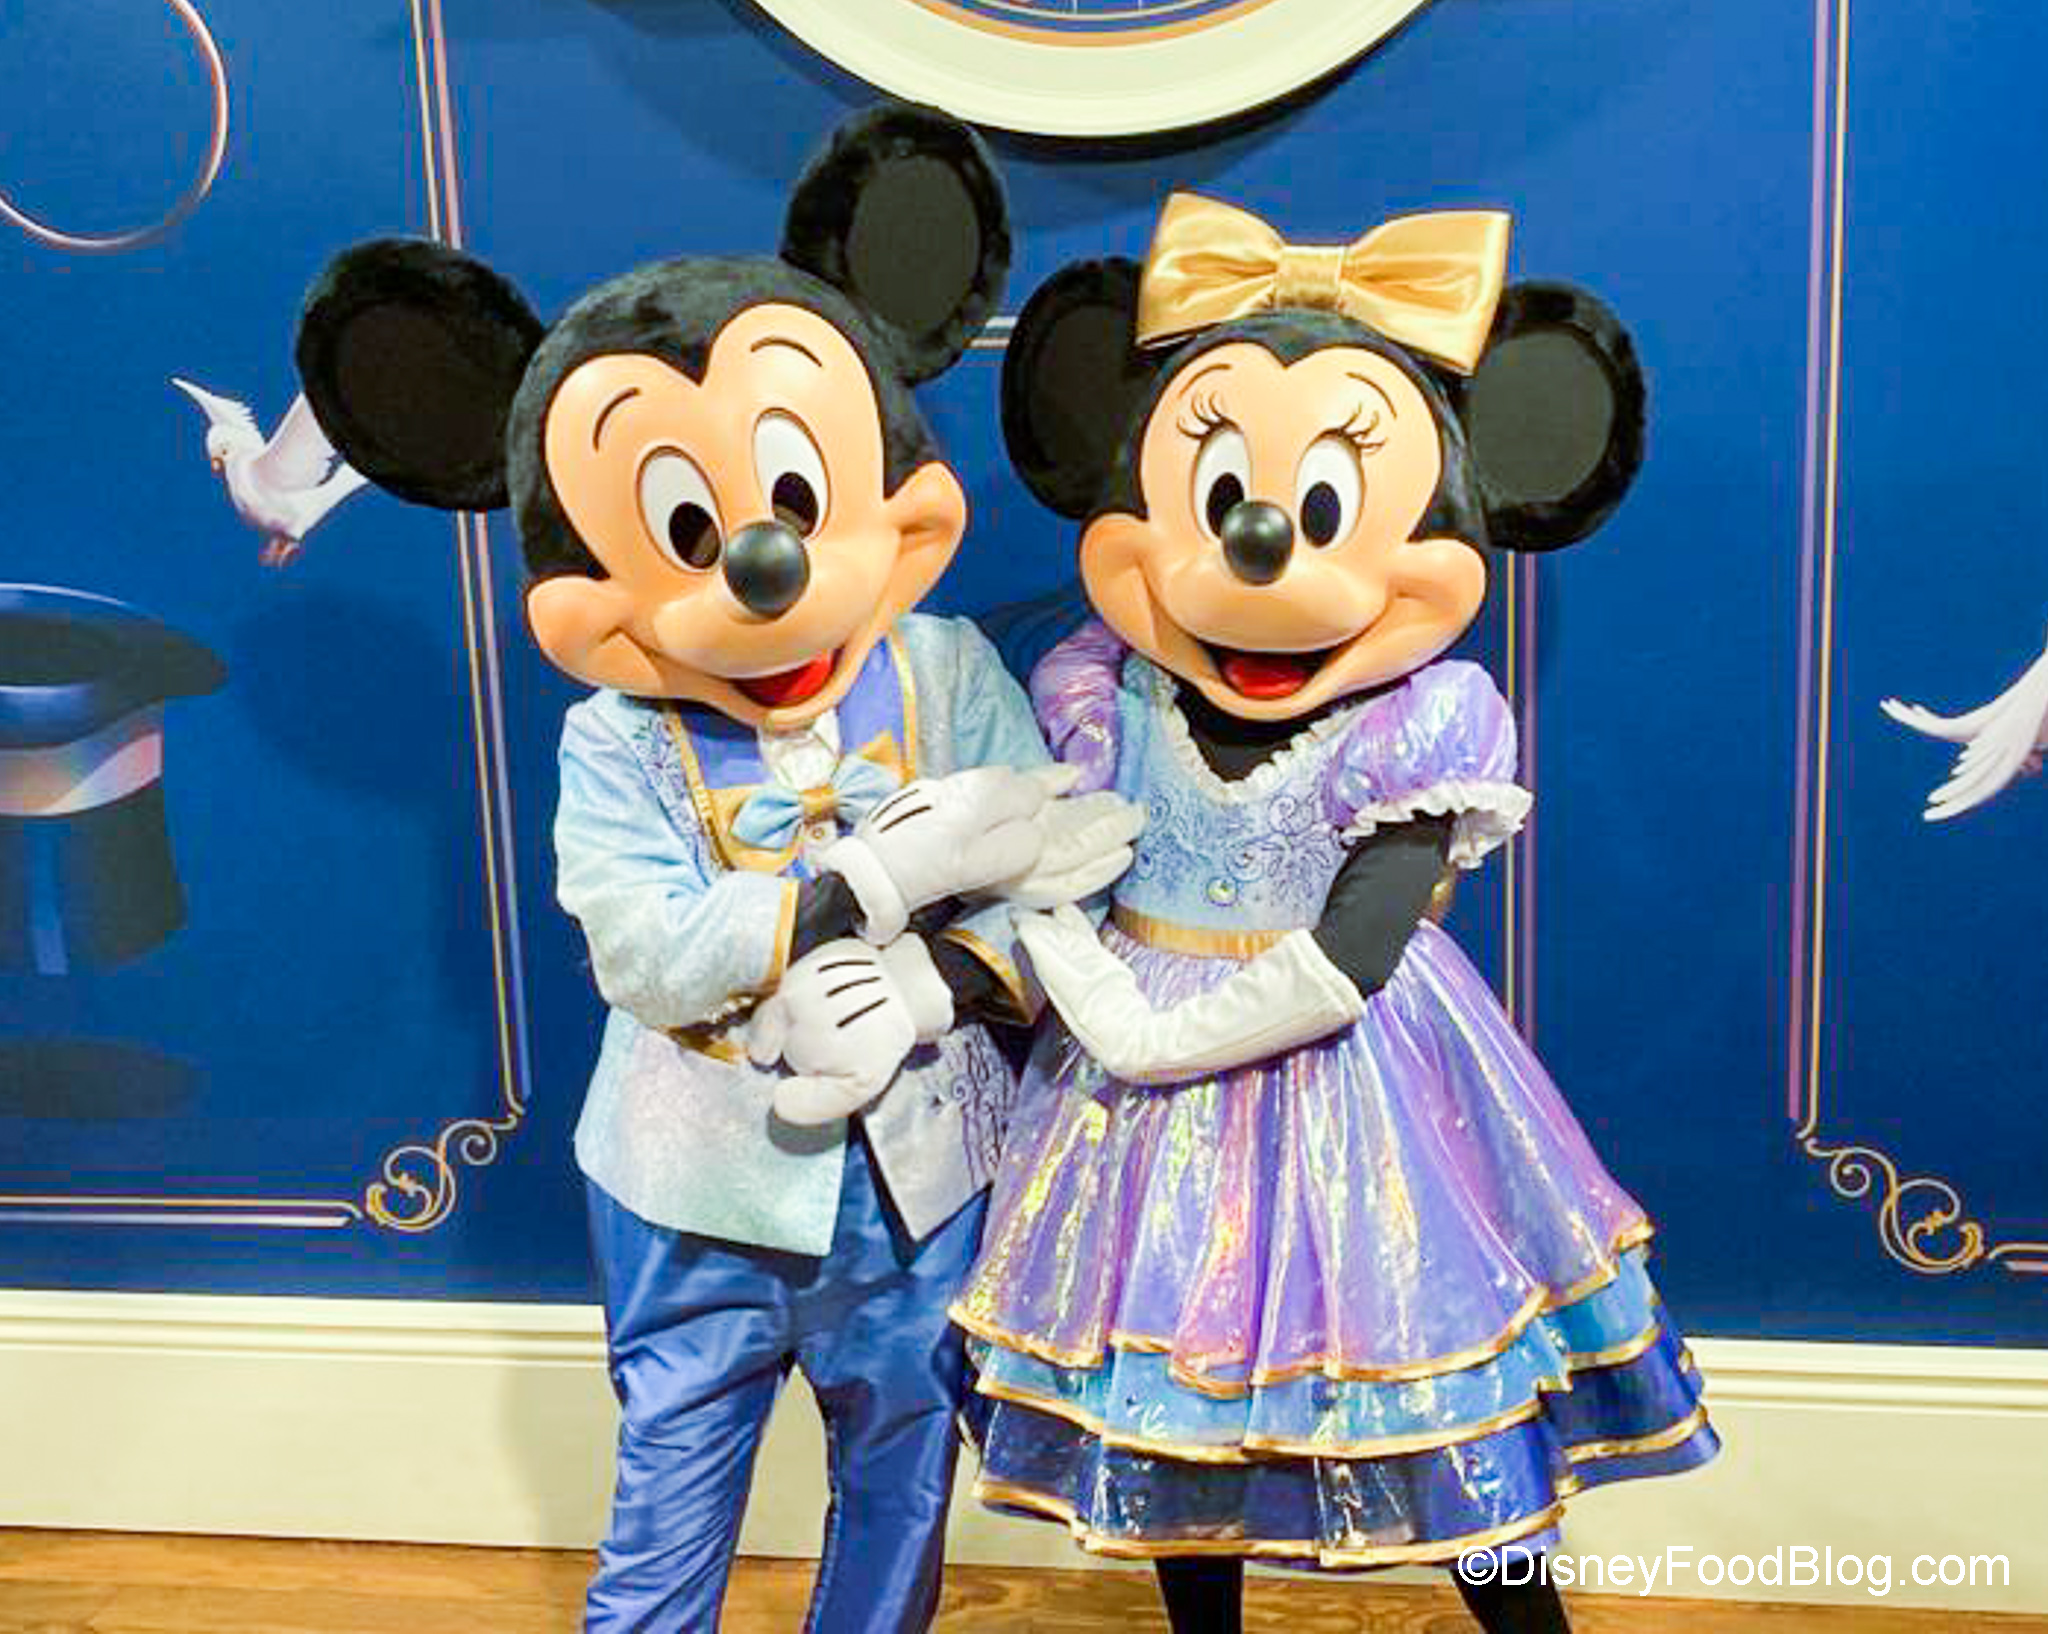  DisneyParks Disney Parks Exclusive - Minnie Mickey